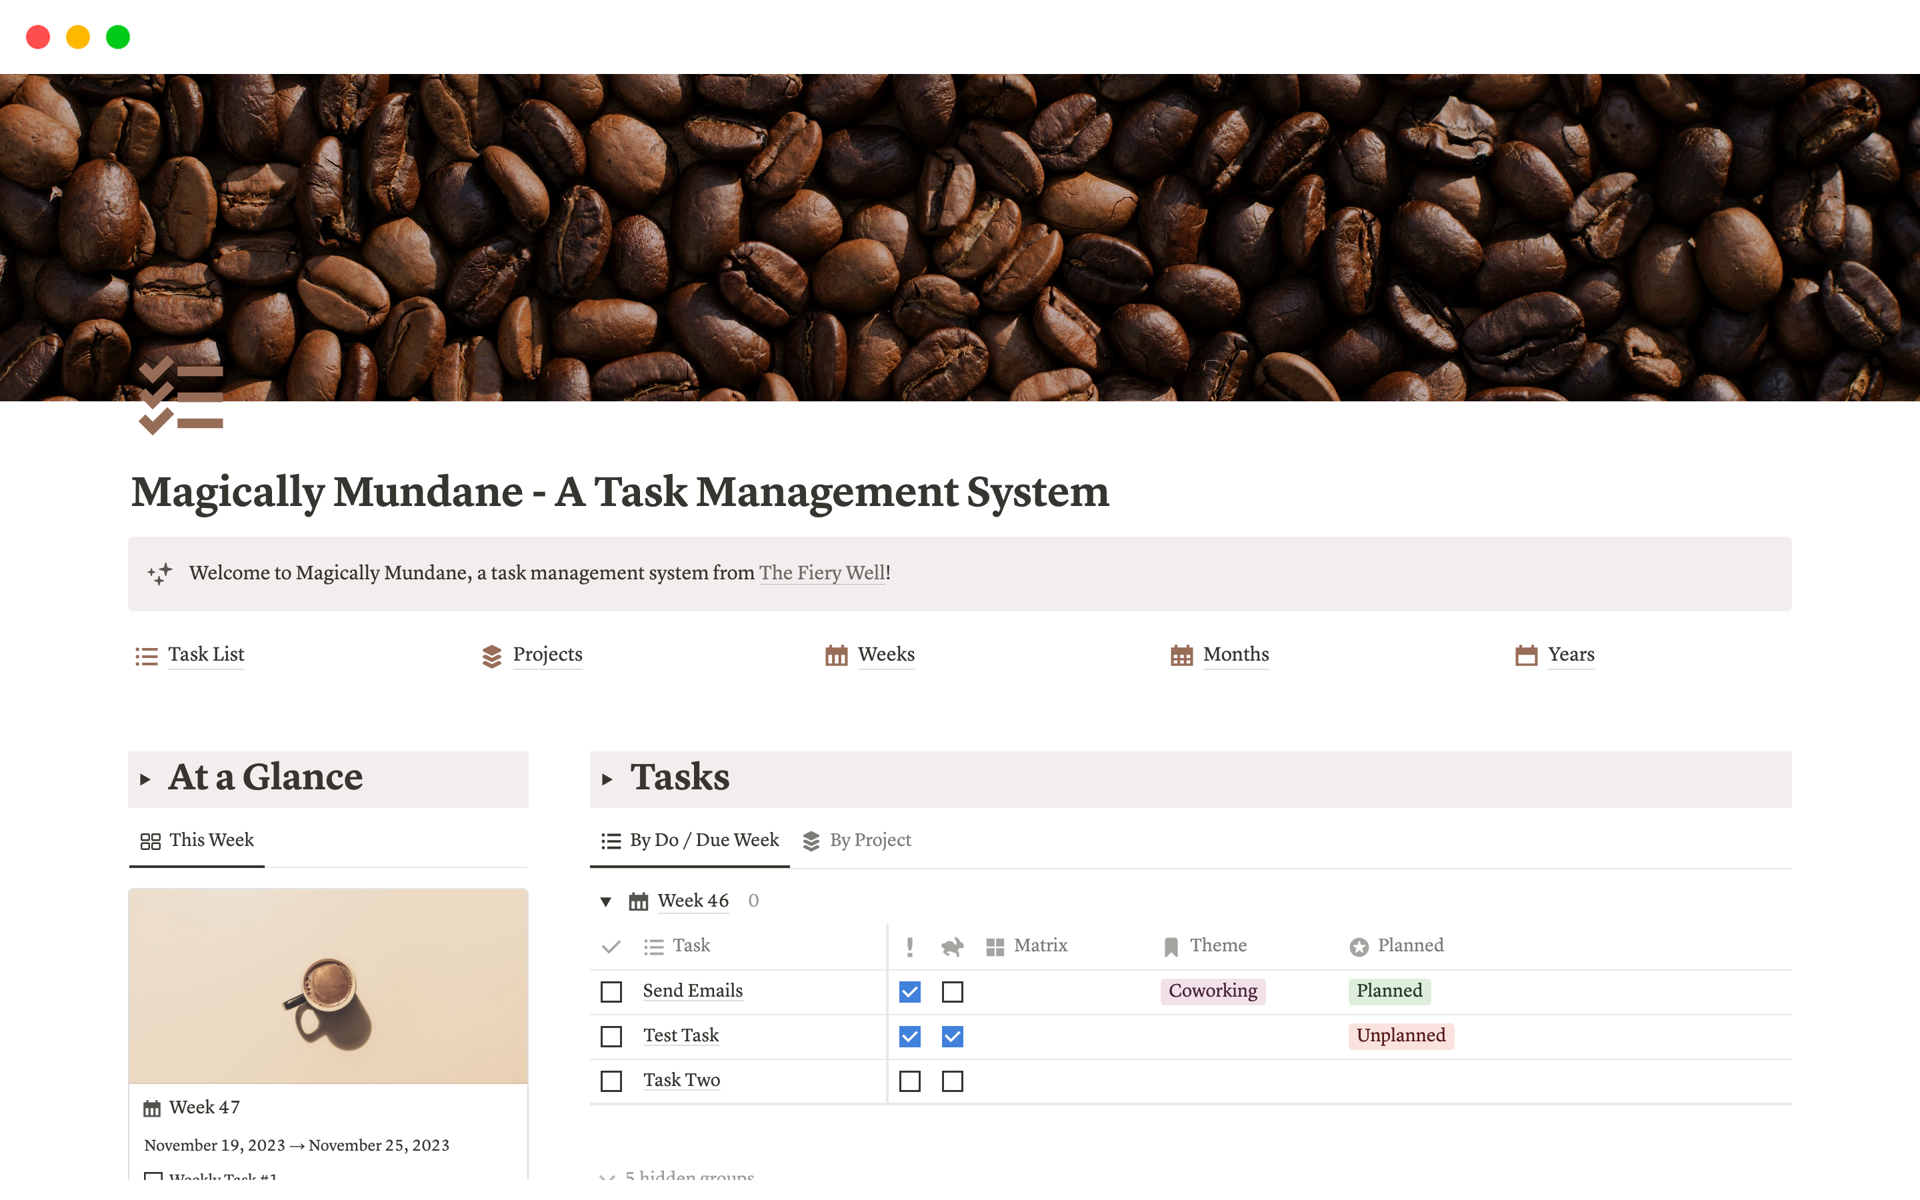 Vista previa de una plantilla para Magically Mundane - A Task Management System